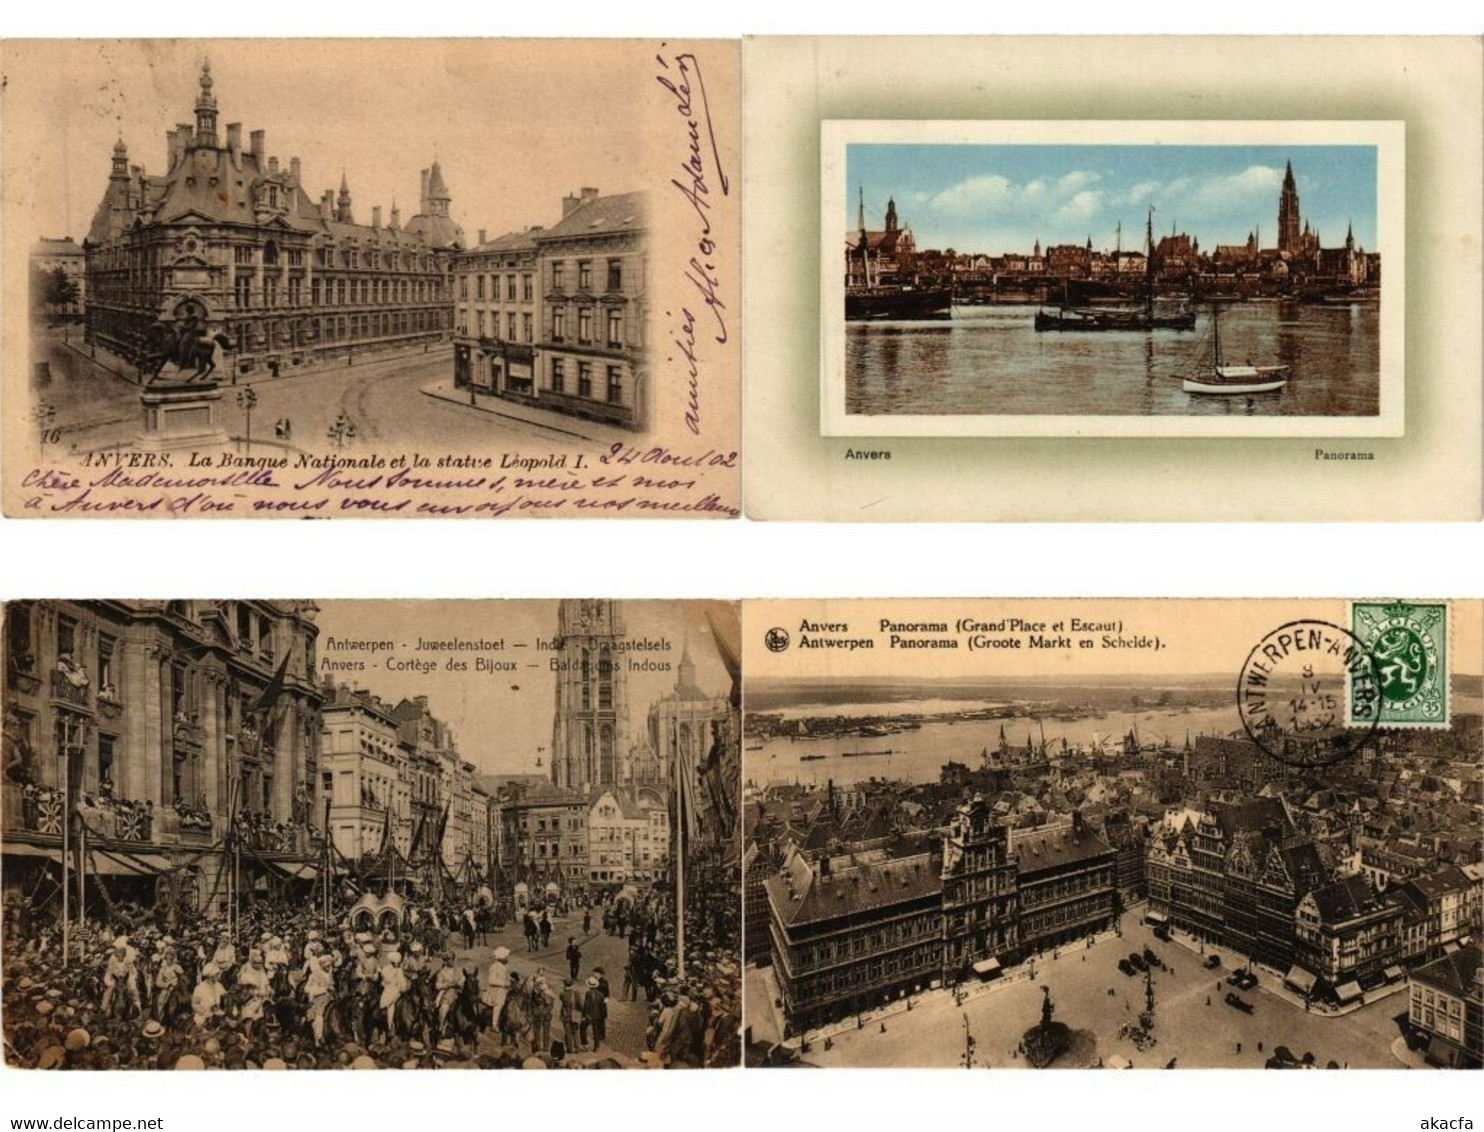 ANTWERP ANVERS ANTWERPEN BELGIUM 1000 Vintage Postcards Mostly Pre-1950 (L5569) - Collections & Lots